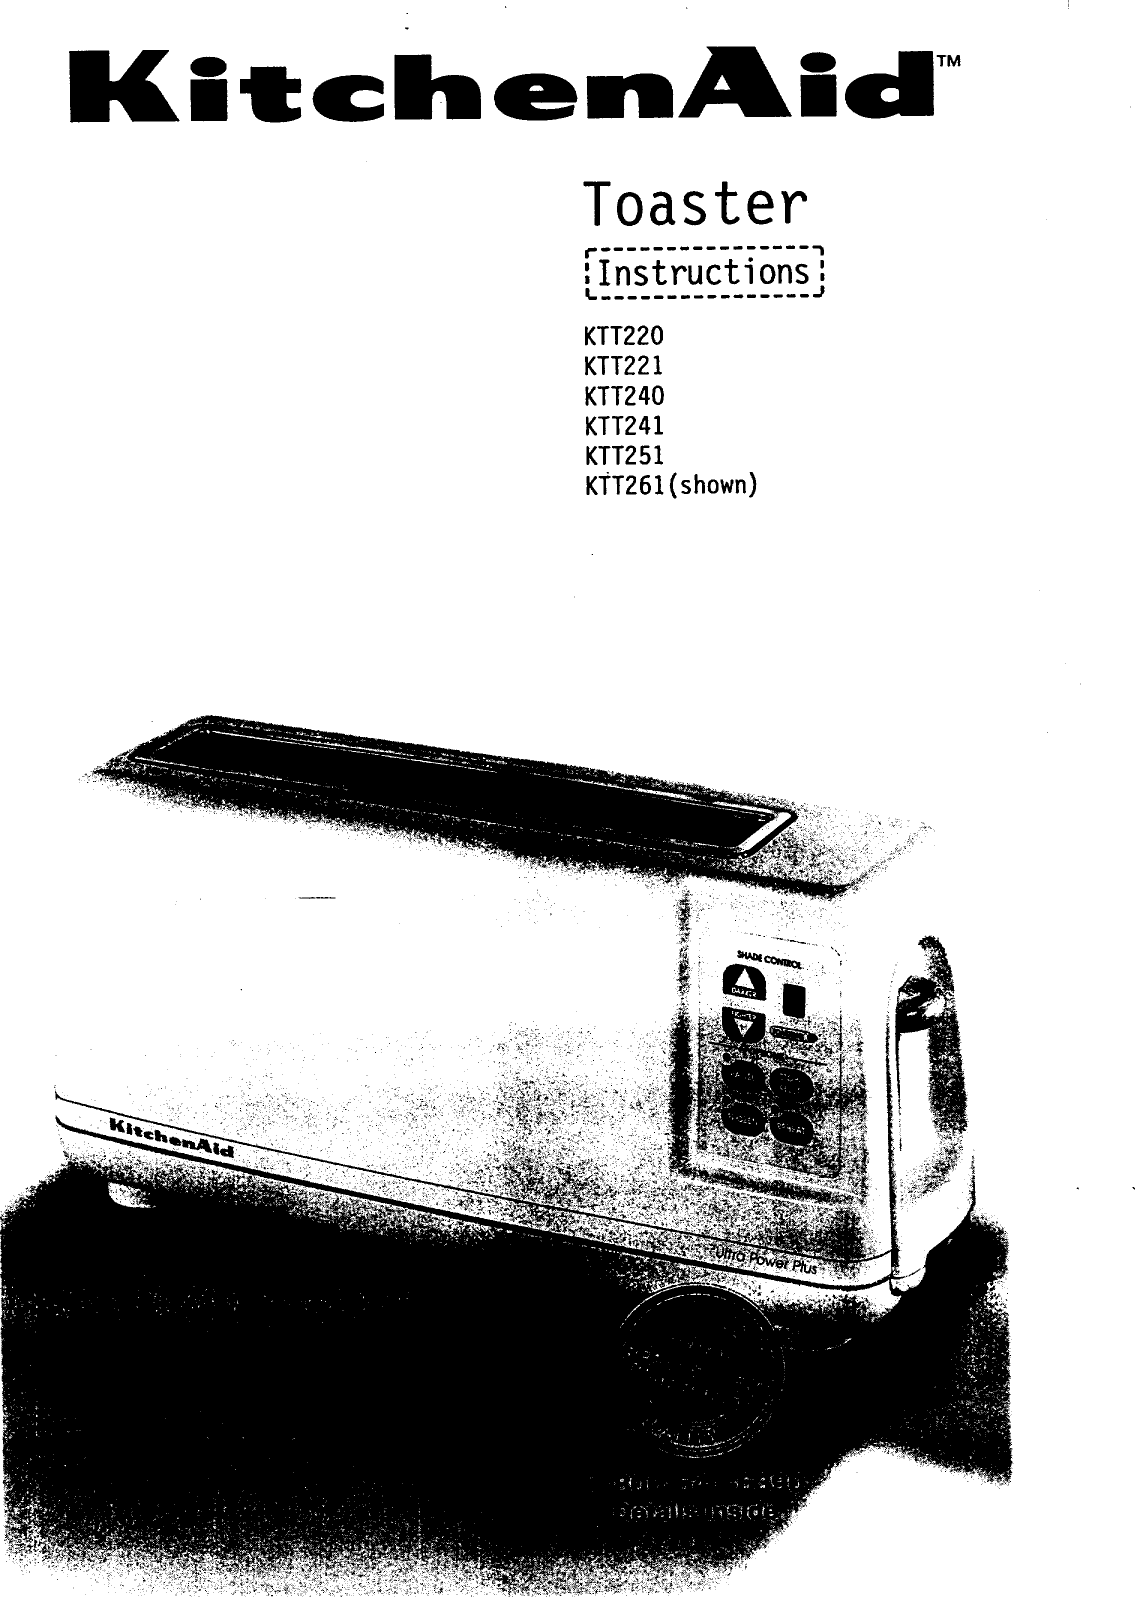 KITCHENAID Toaster Manual 98100035